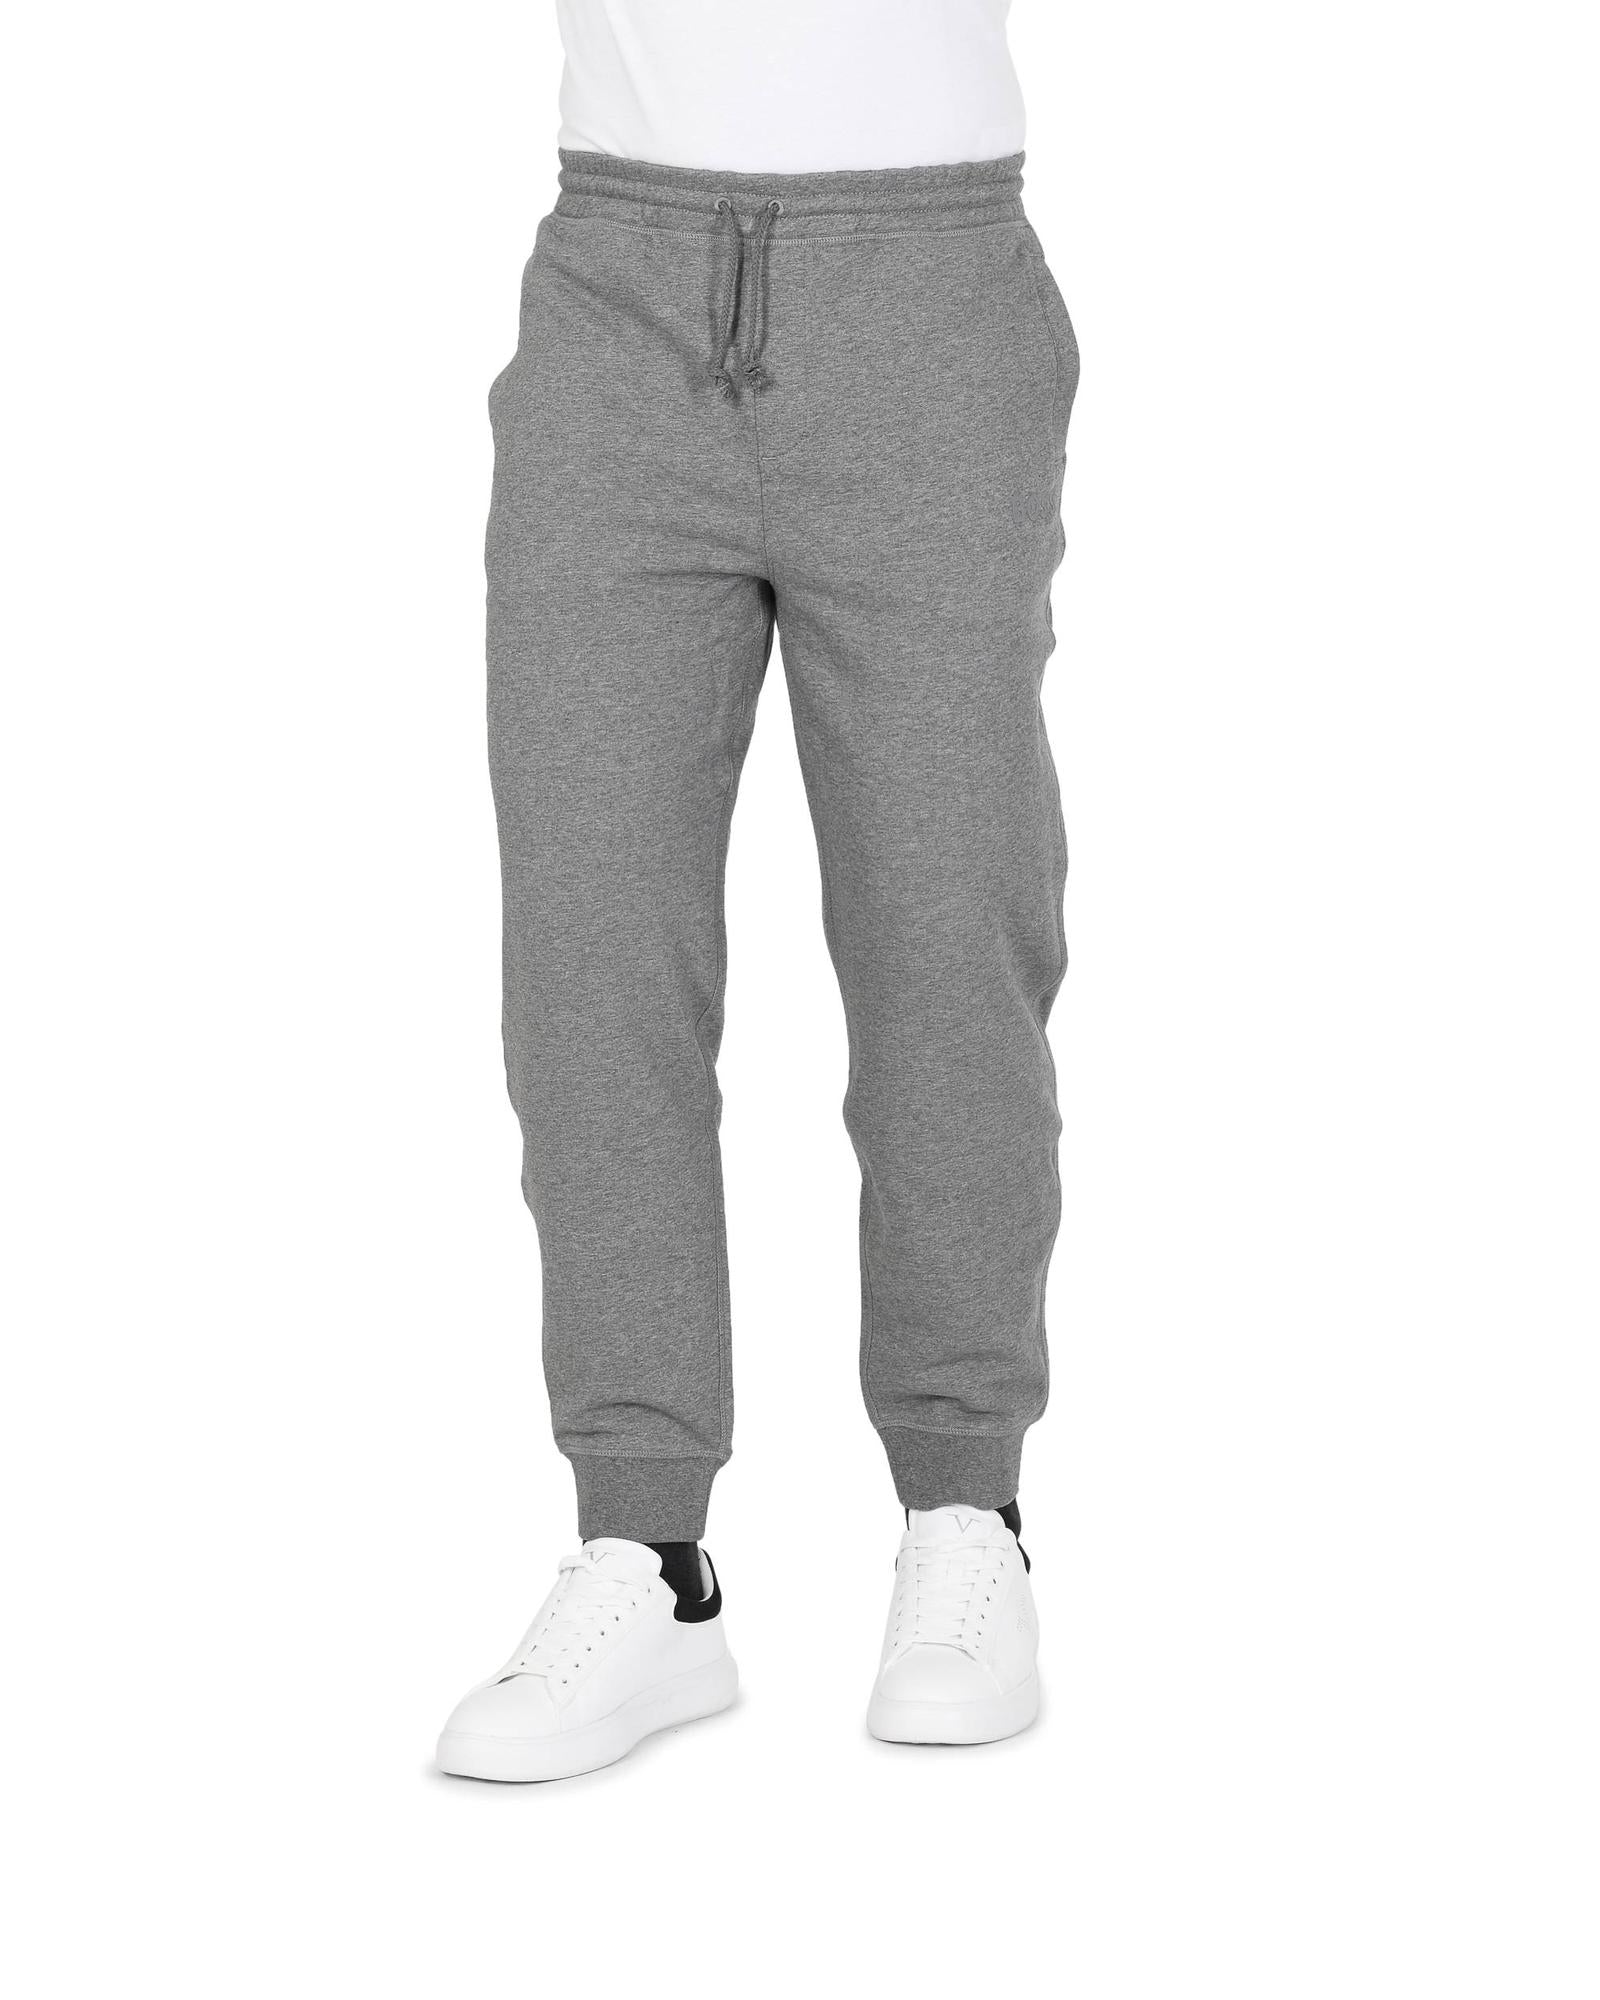 Sleek Grey Comfort Hugo Boss'S Cotton Blend Pants